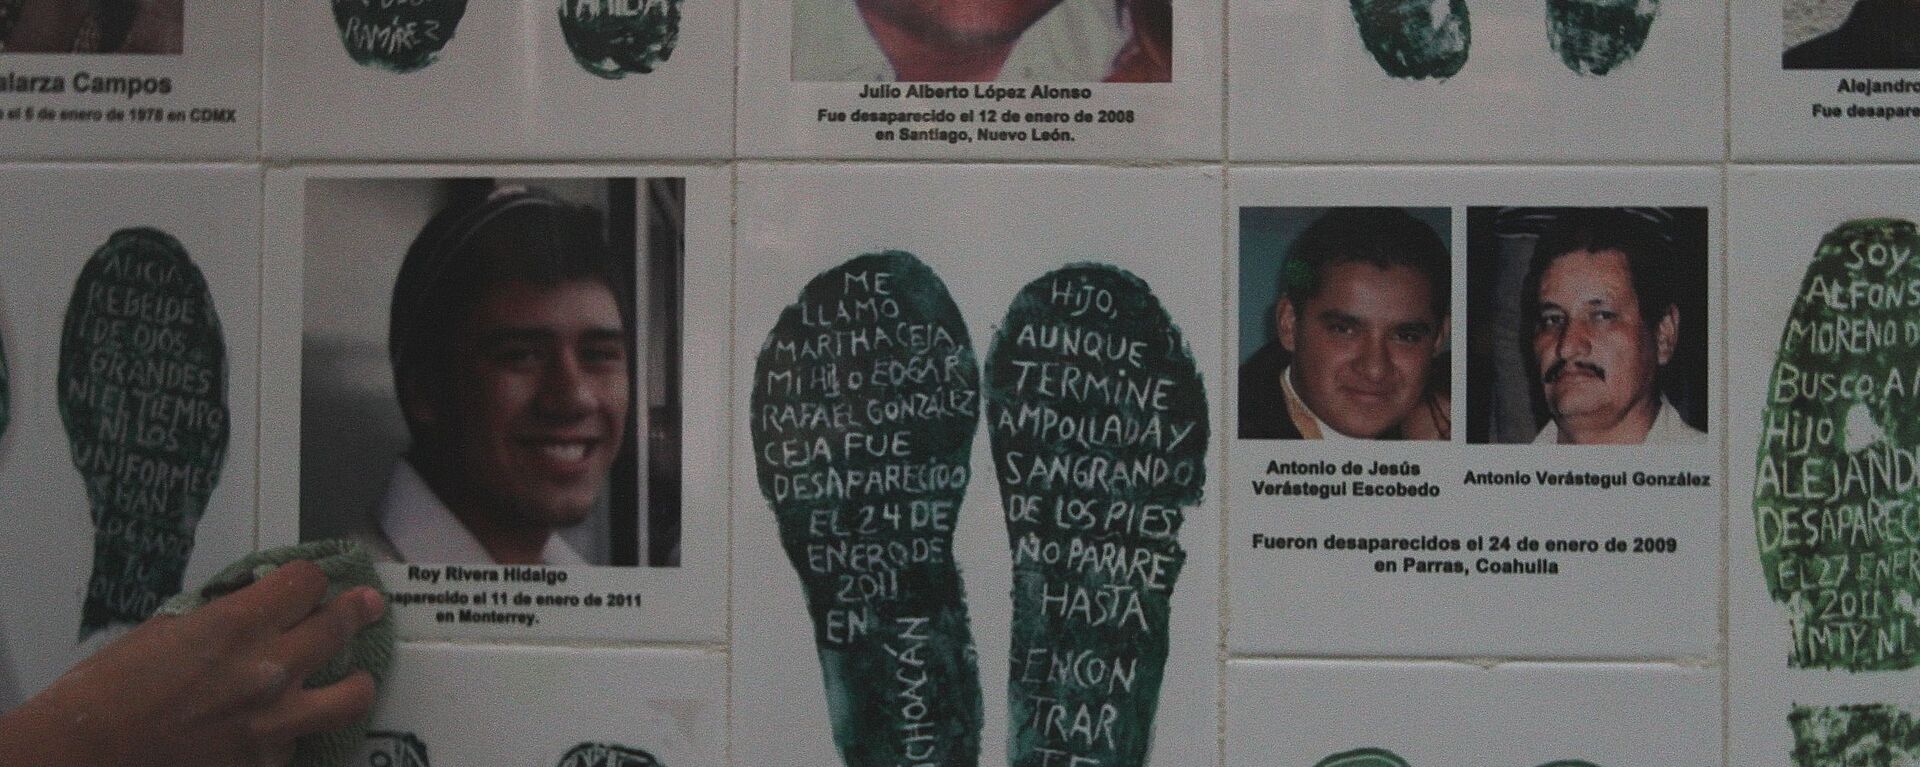 Familias de víctimas de desaparición forzada en México colocan un memorial frente a la Fiscalía - Sputnik Mundo, 1920, 15.09.2020